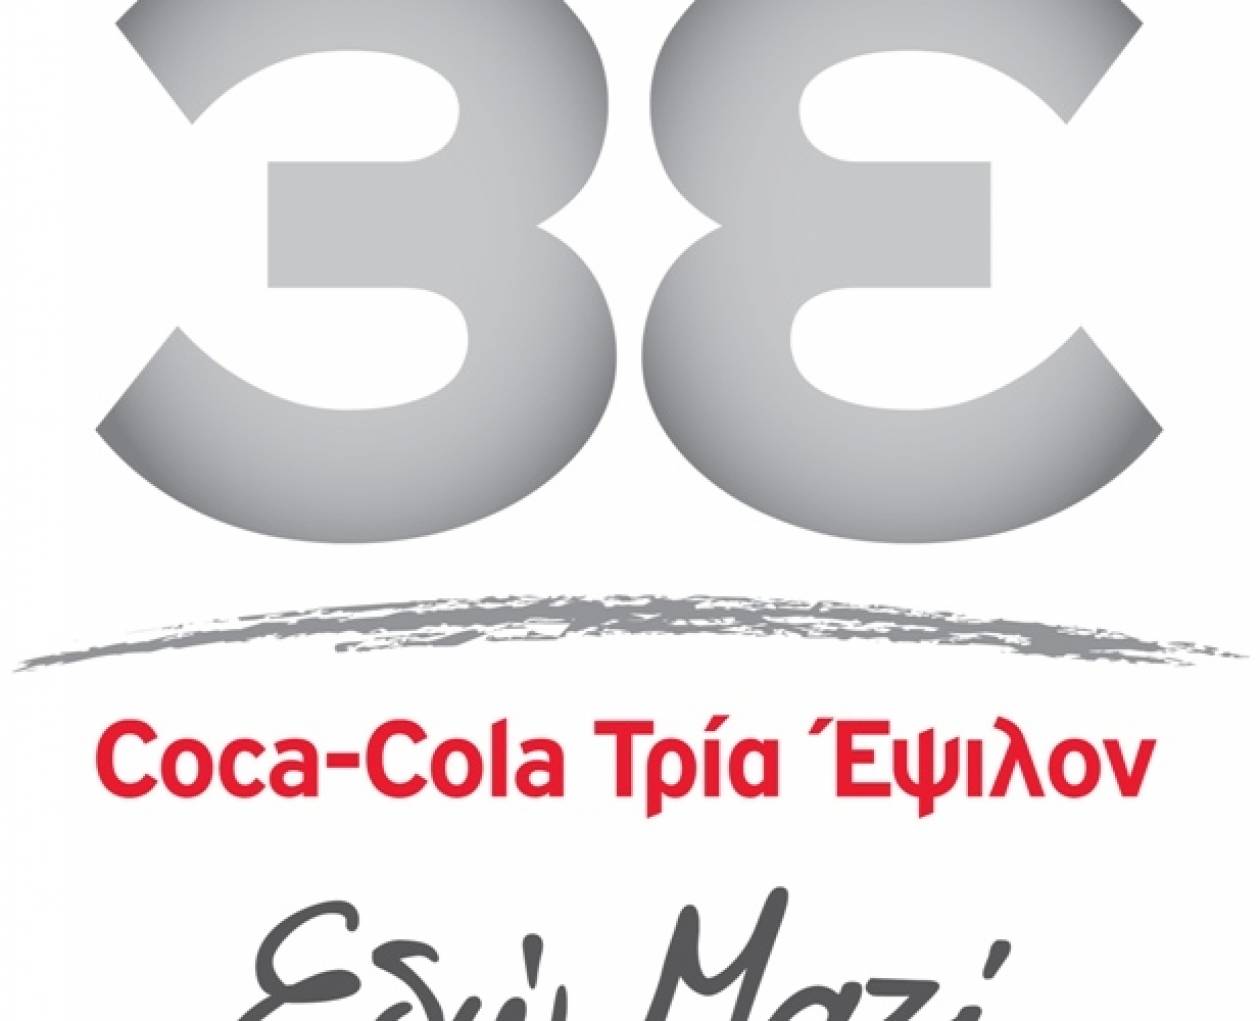 Coca-Cola 3Έψιλον: Εδώ Μαζί στην Ελλάδα, με επενδύσεις 275 εκατ. Ευρώ την τελευταία 2ετία